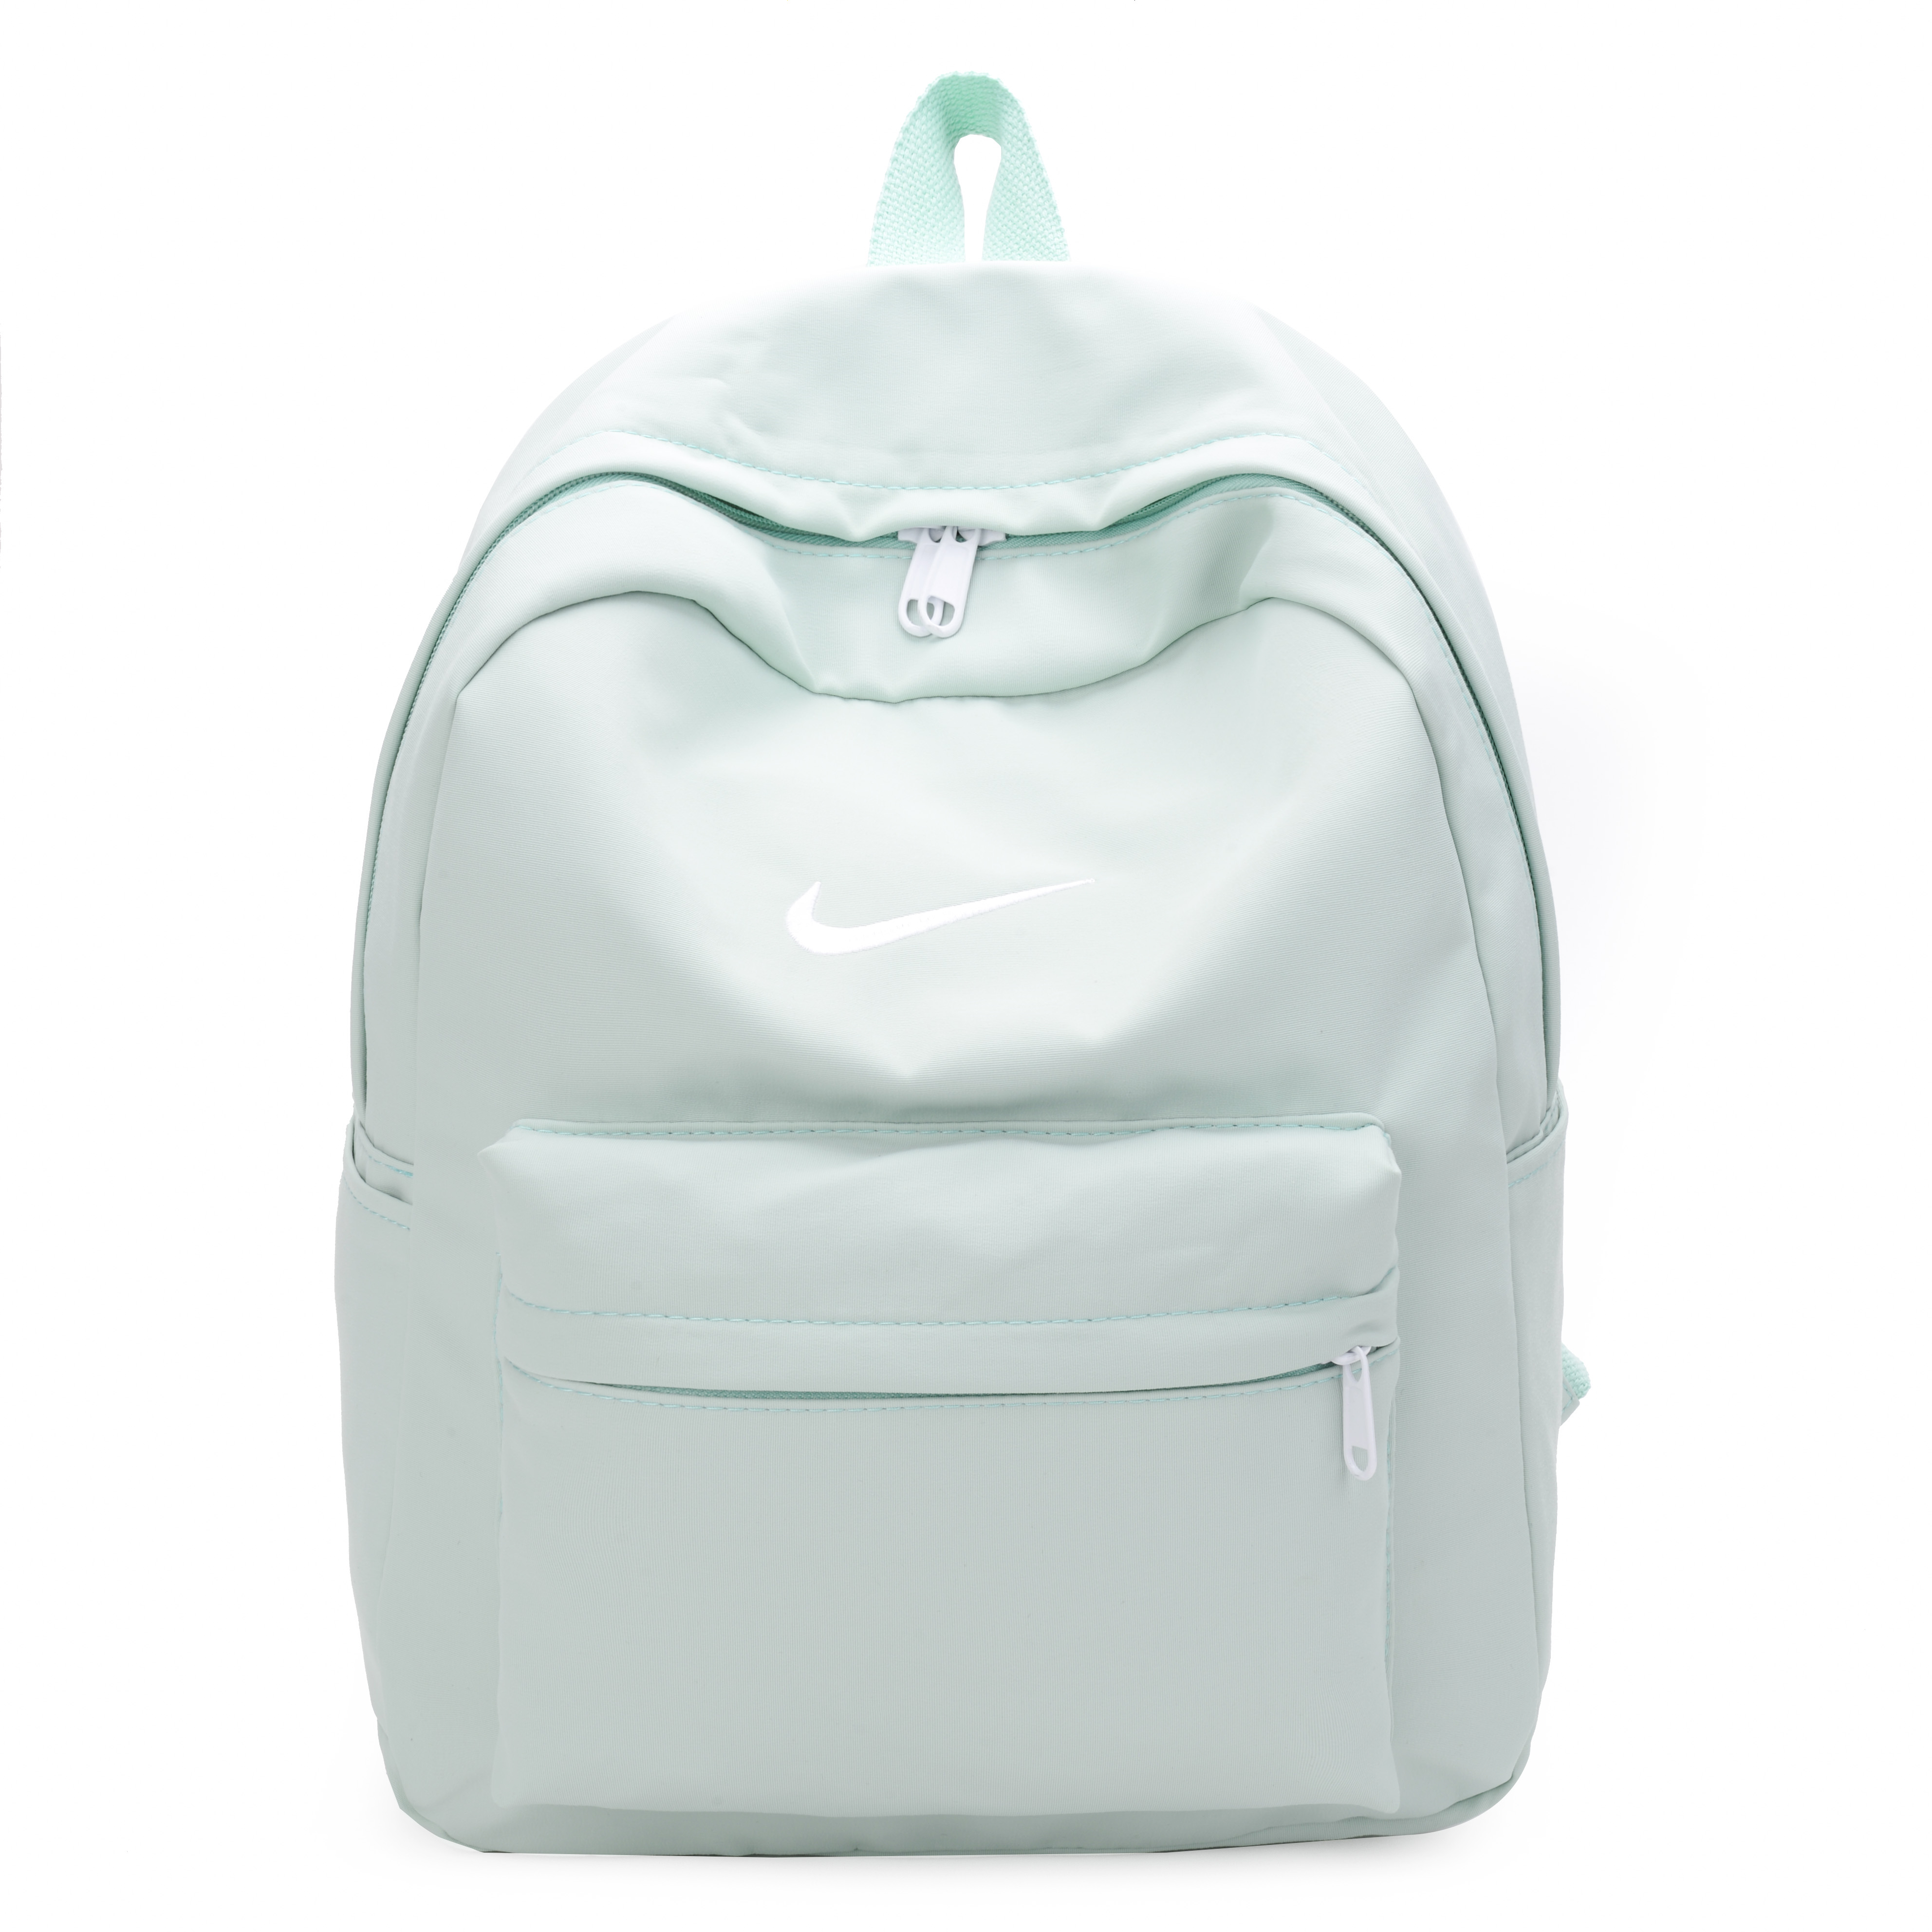 light grey nike backpack